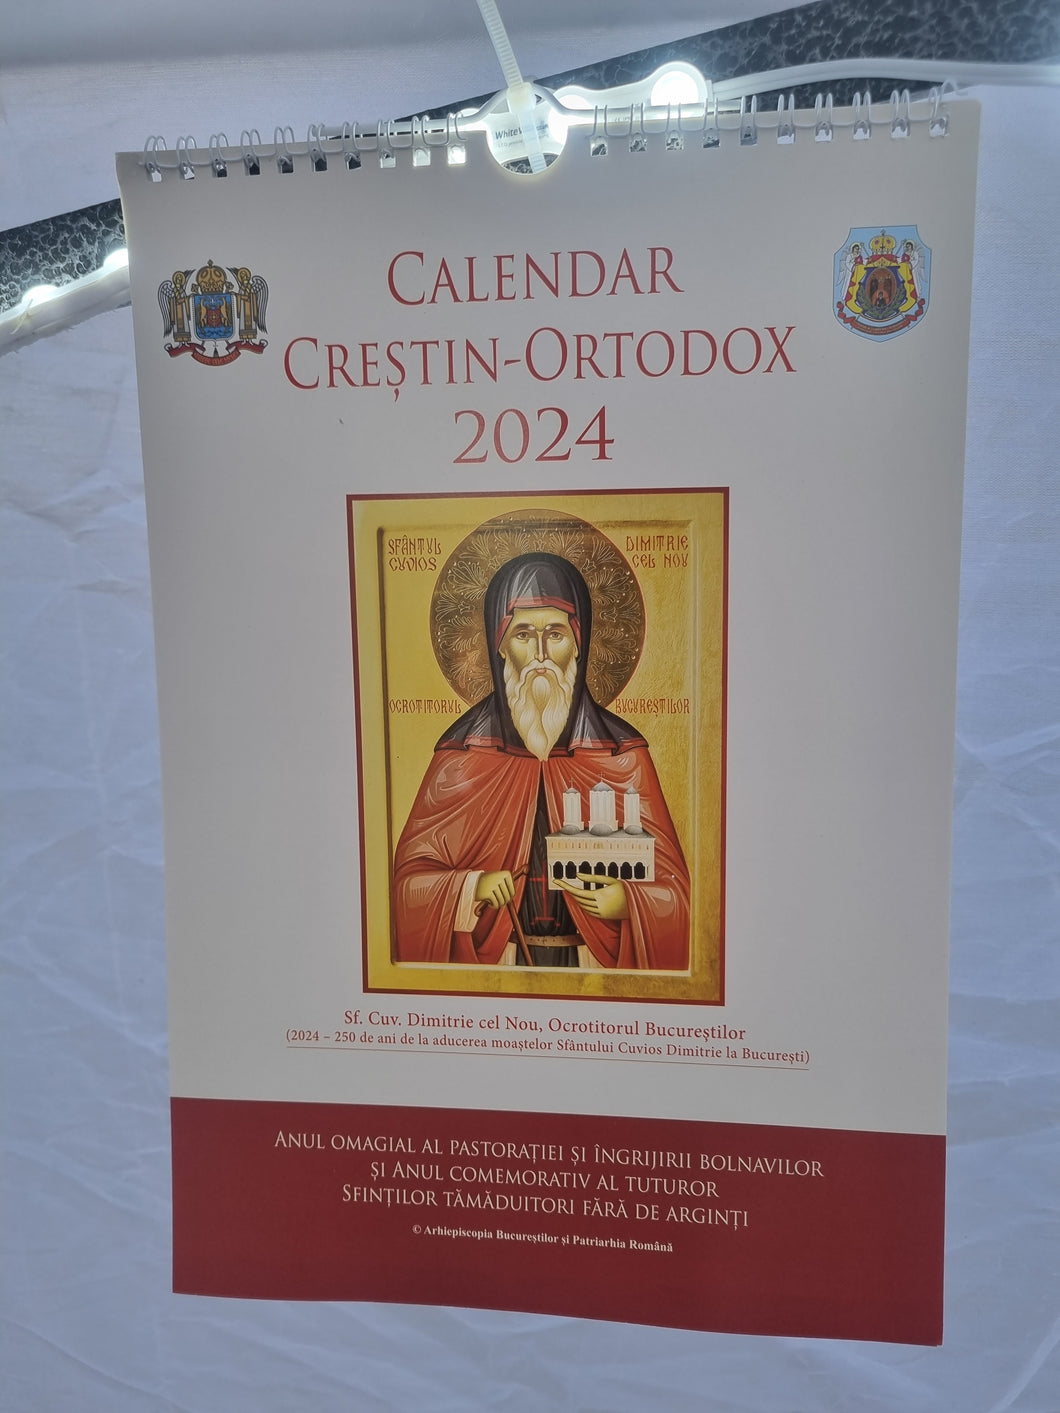 Calendar crestin ortodox 2024 A4